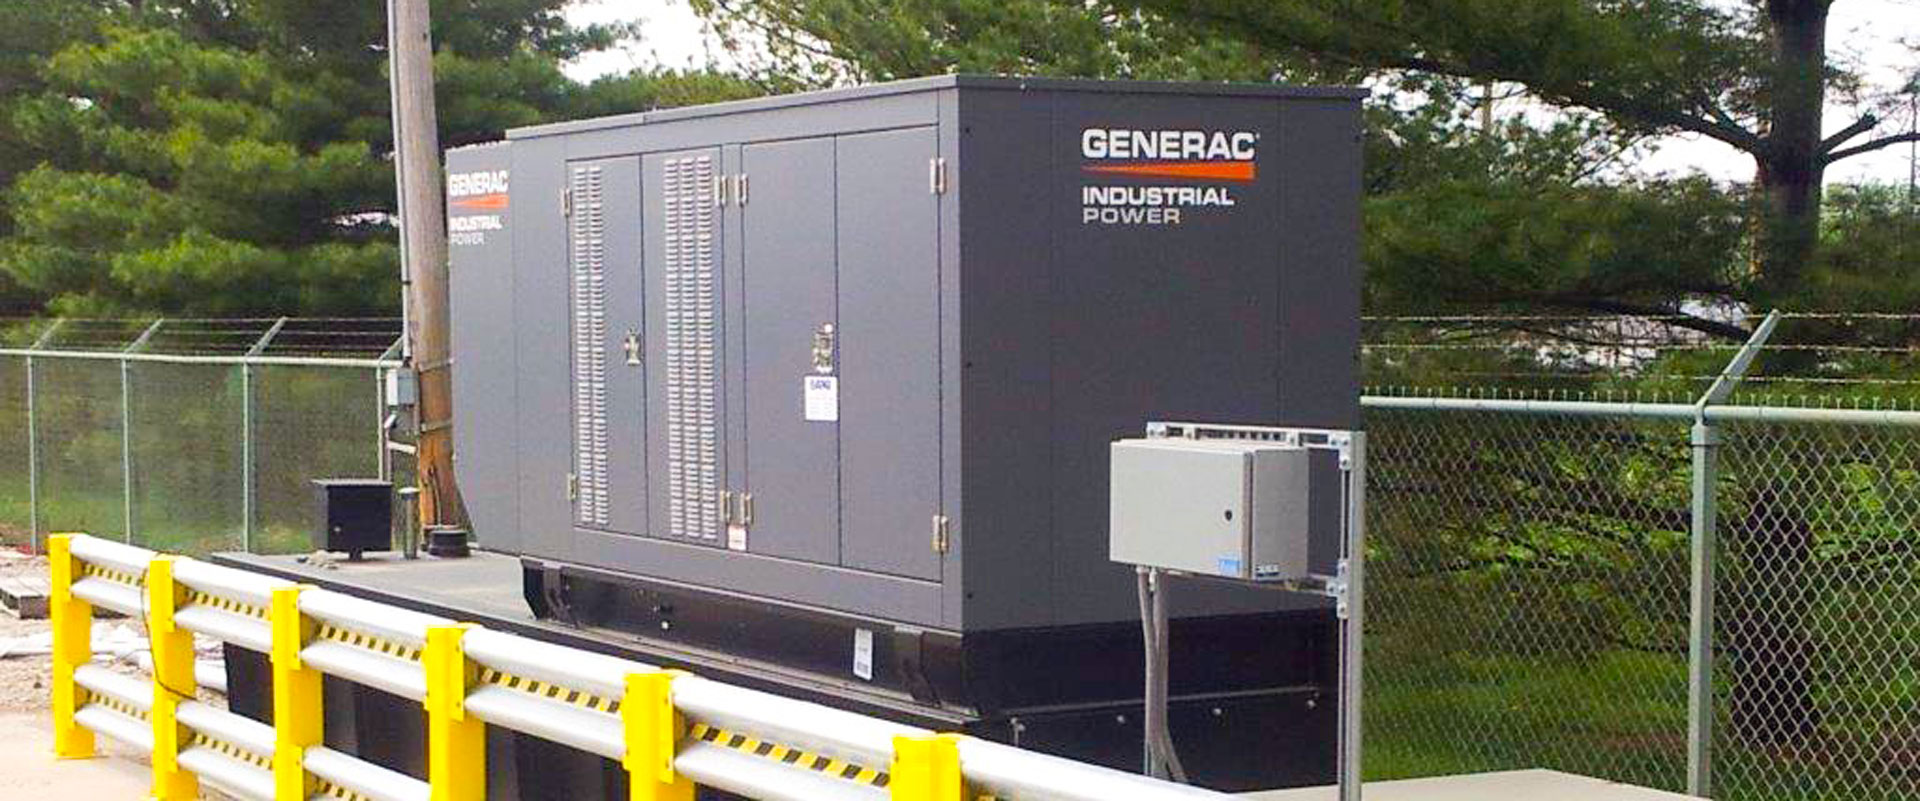 emergency power generators